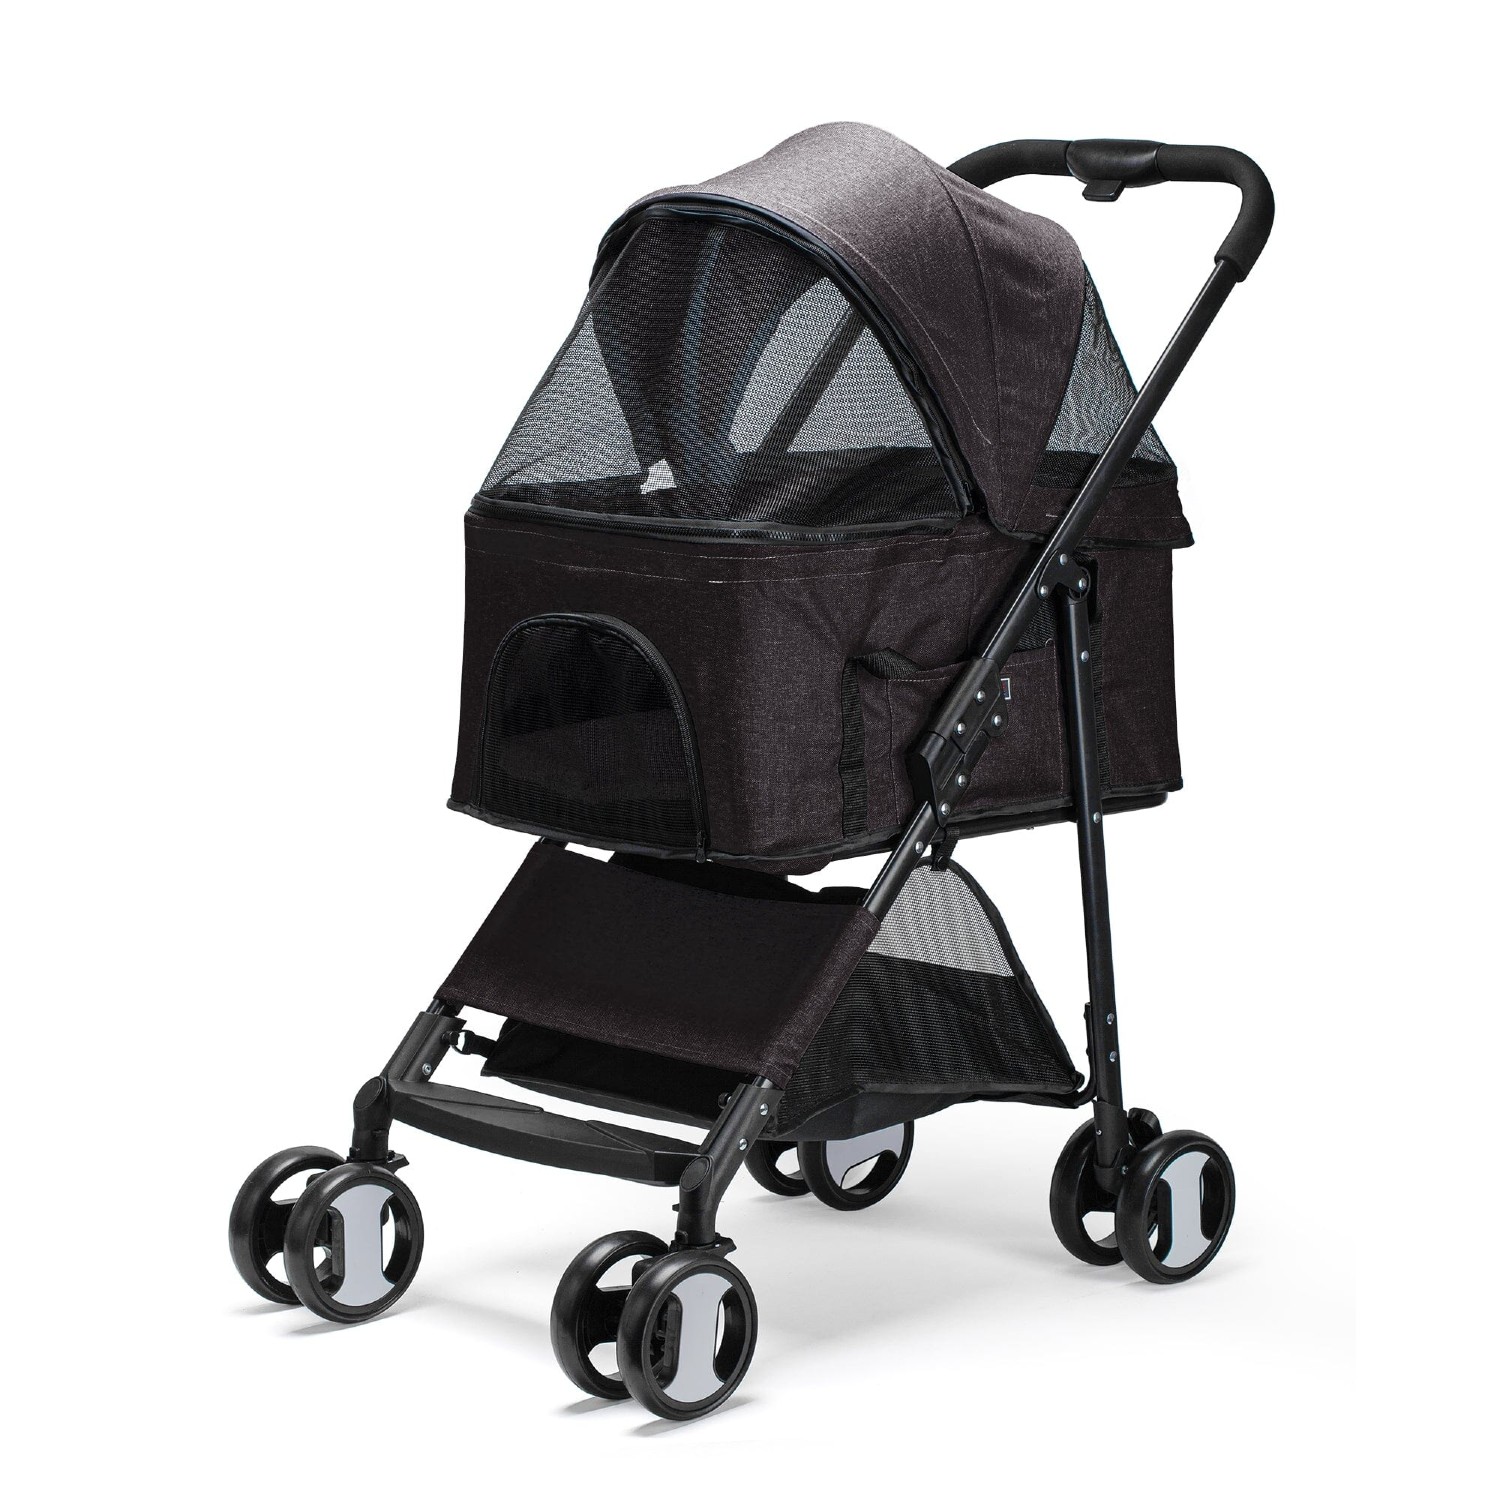 Dogline Executive Pet Stroller with Removable Cradle - Black